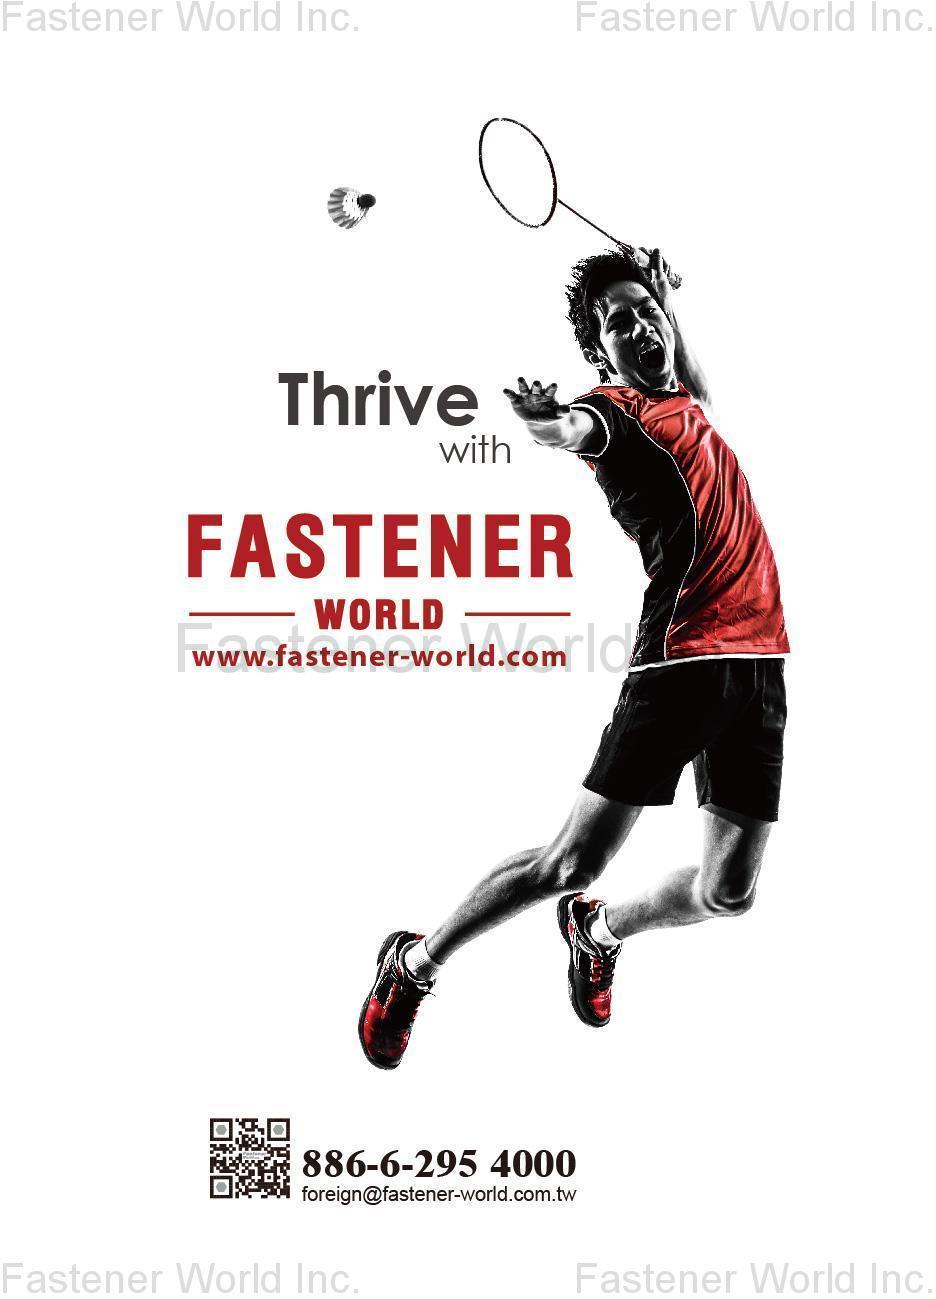 FASTENER WORLD INC. , B2B Advertisement, Online Matchmaking, Sourcing Platform, Global Exhibition